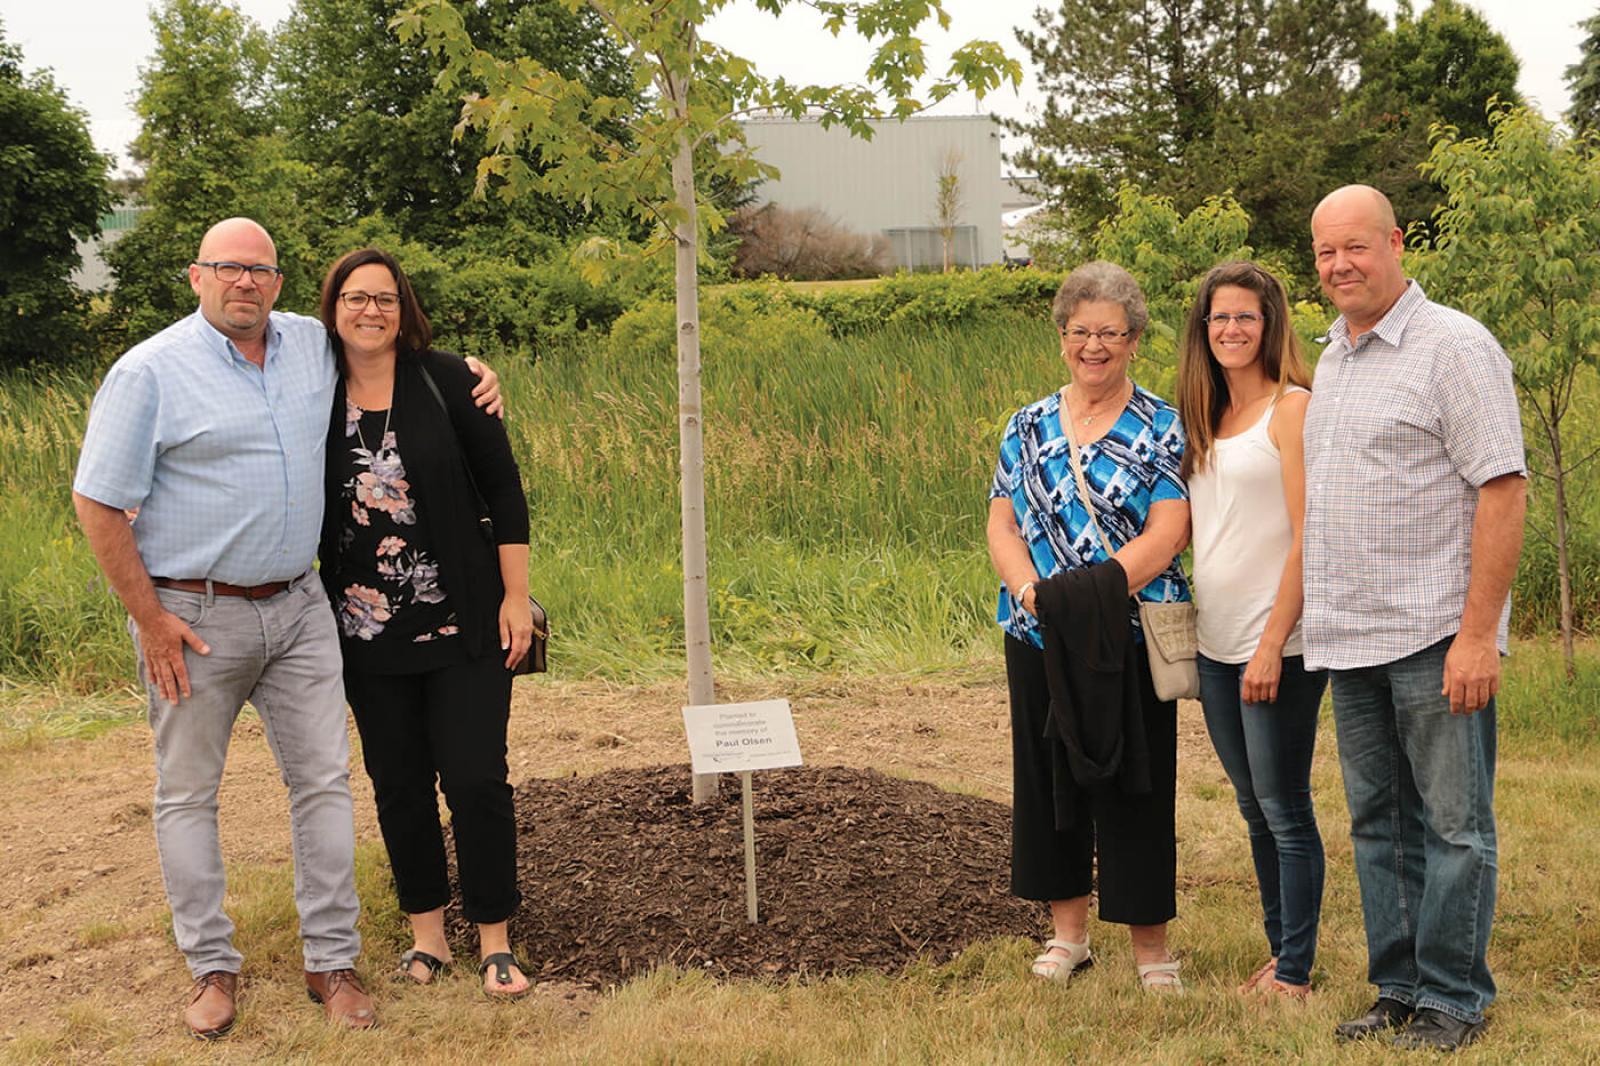 Memorial tree planted for Paul Olsen